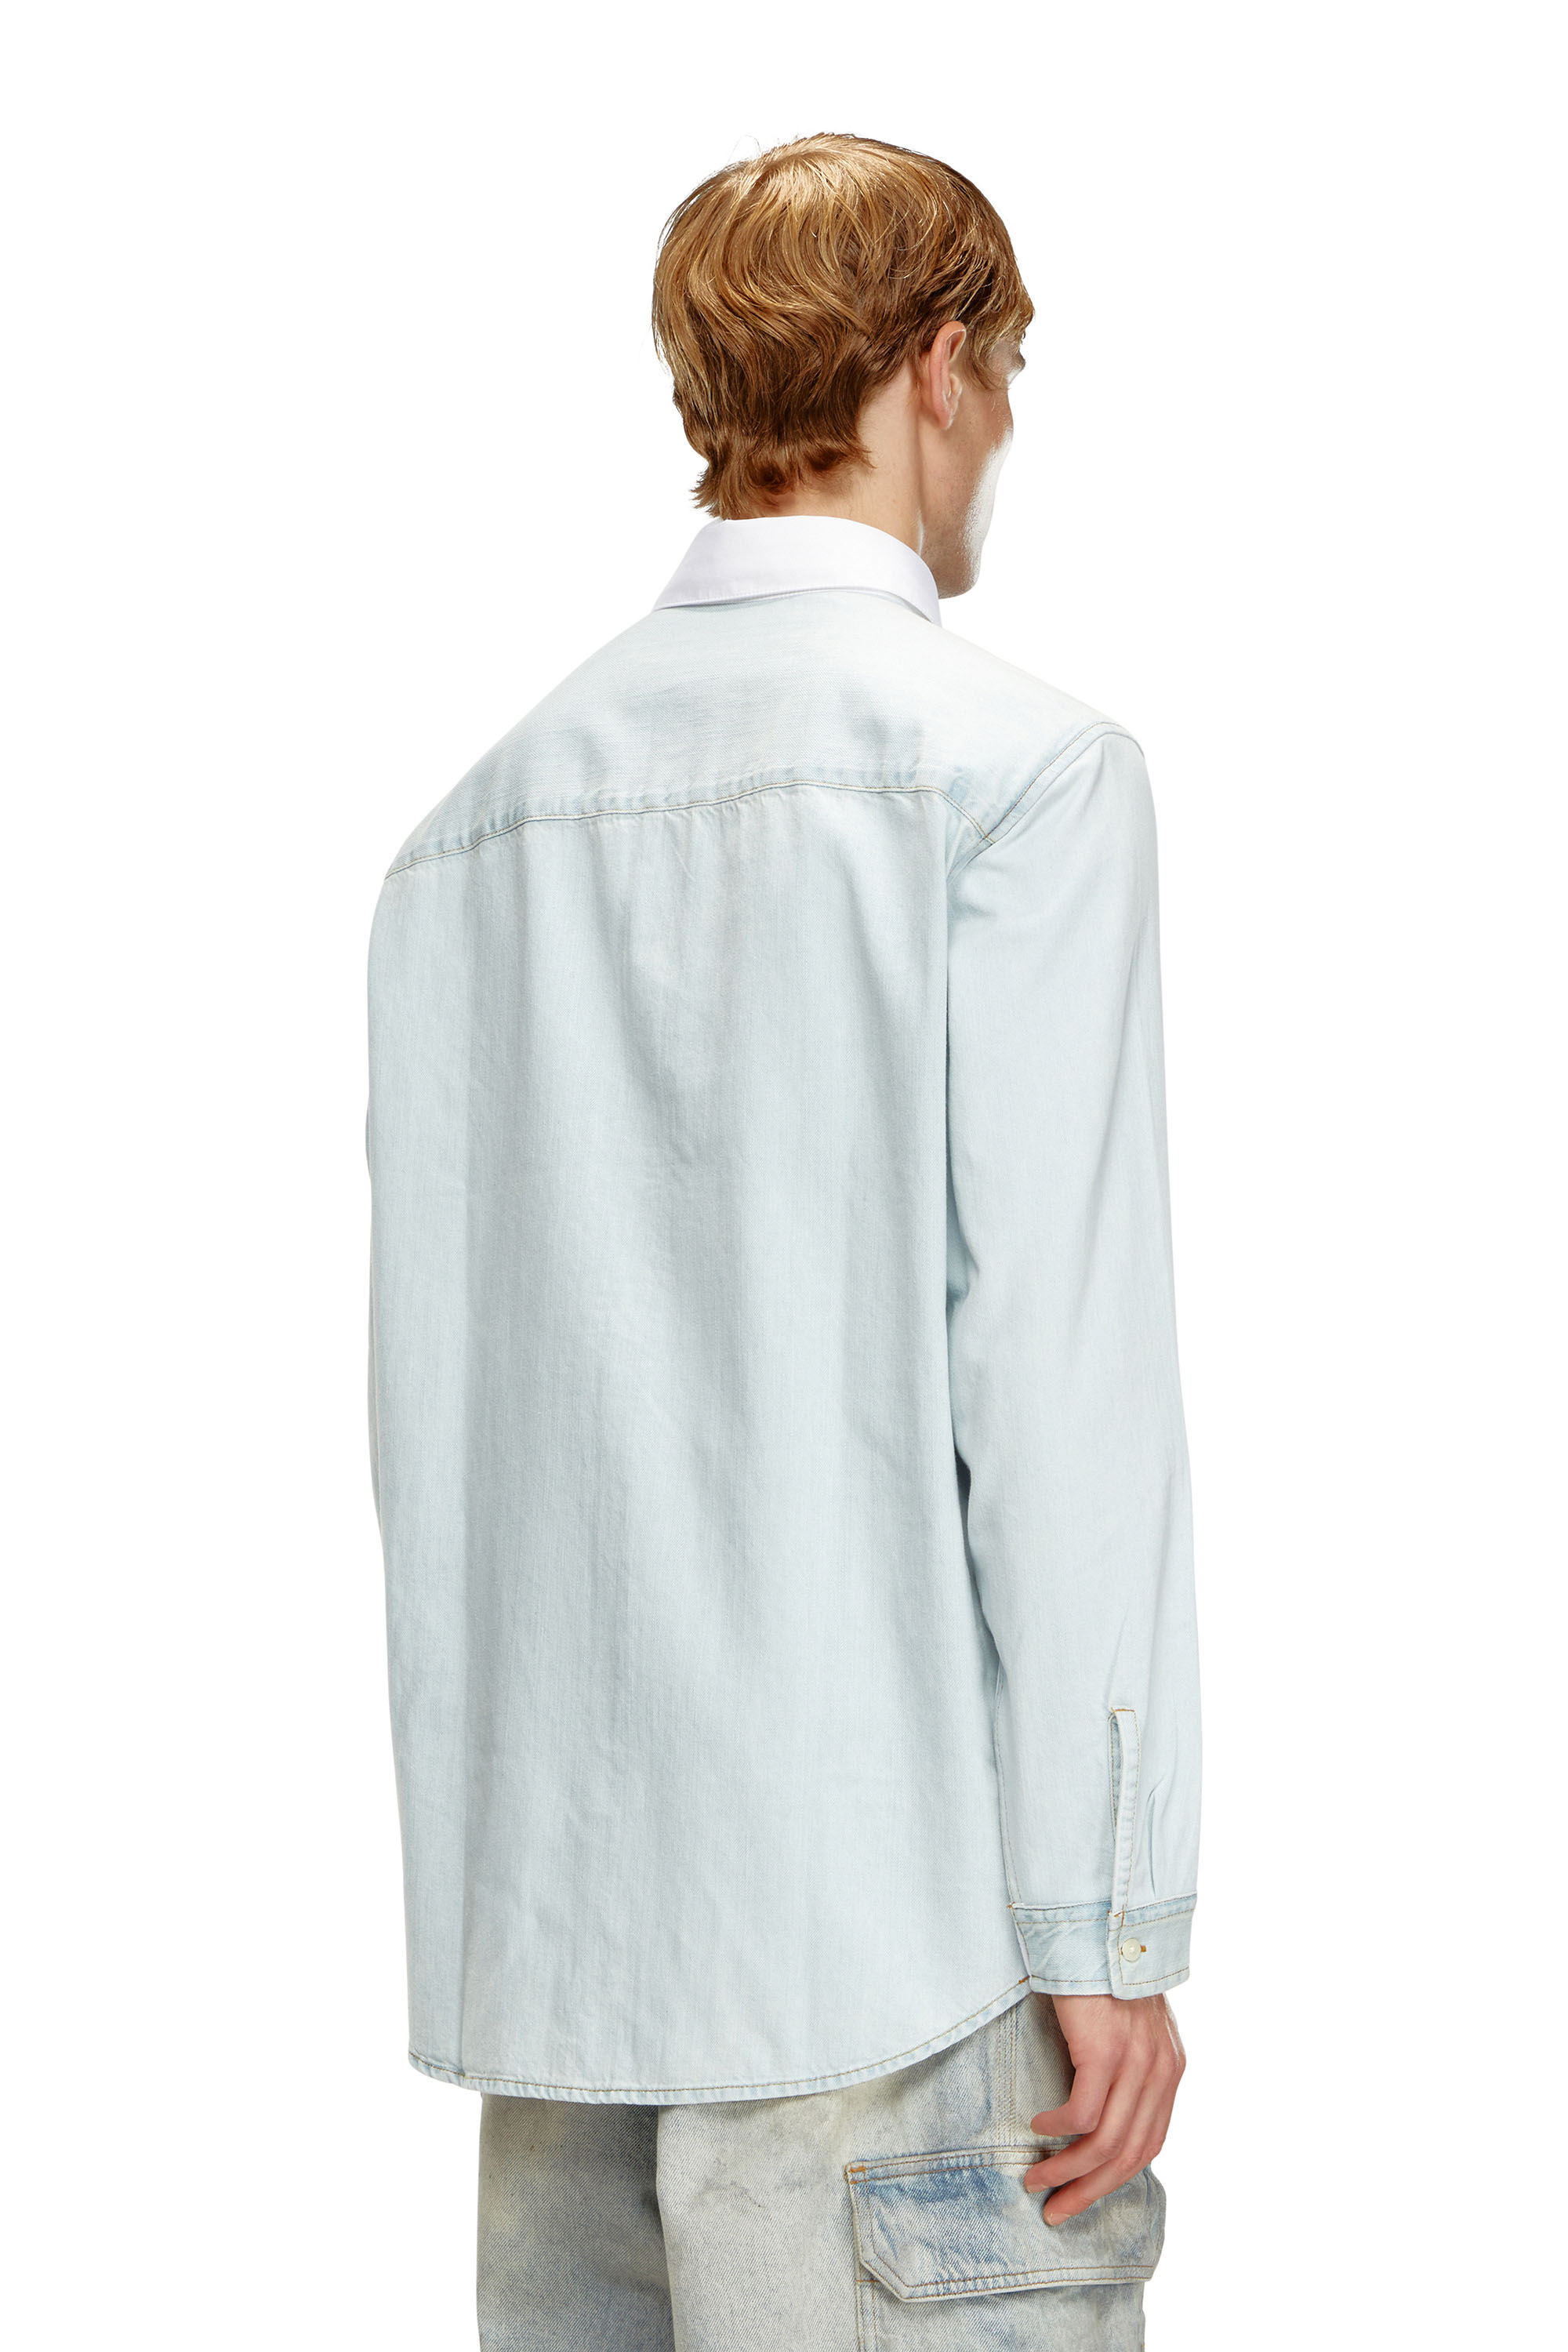 Diesel - S-SIMPLY-DNM, Male Shirt in cotton poplin and denim in マルチカラー - Image 4